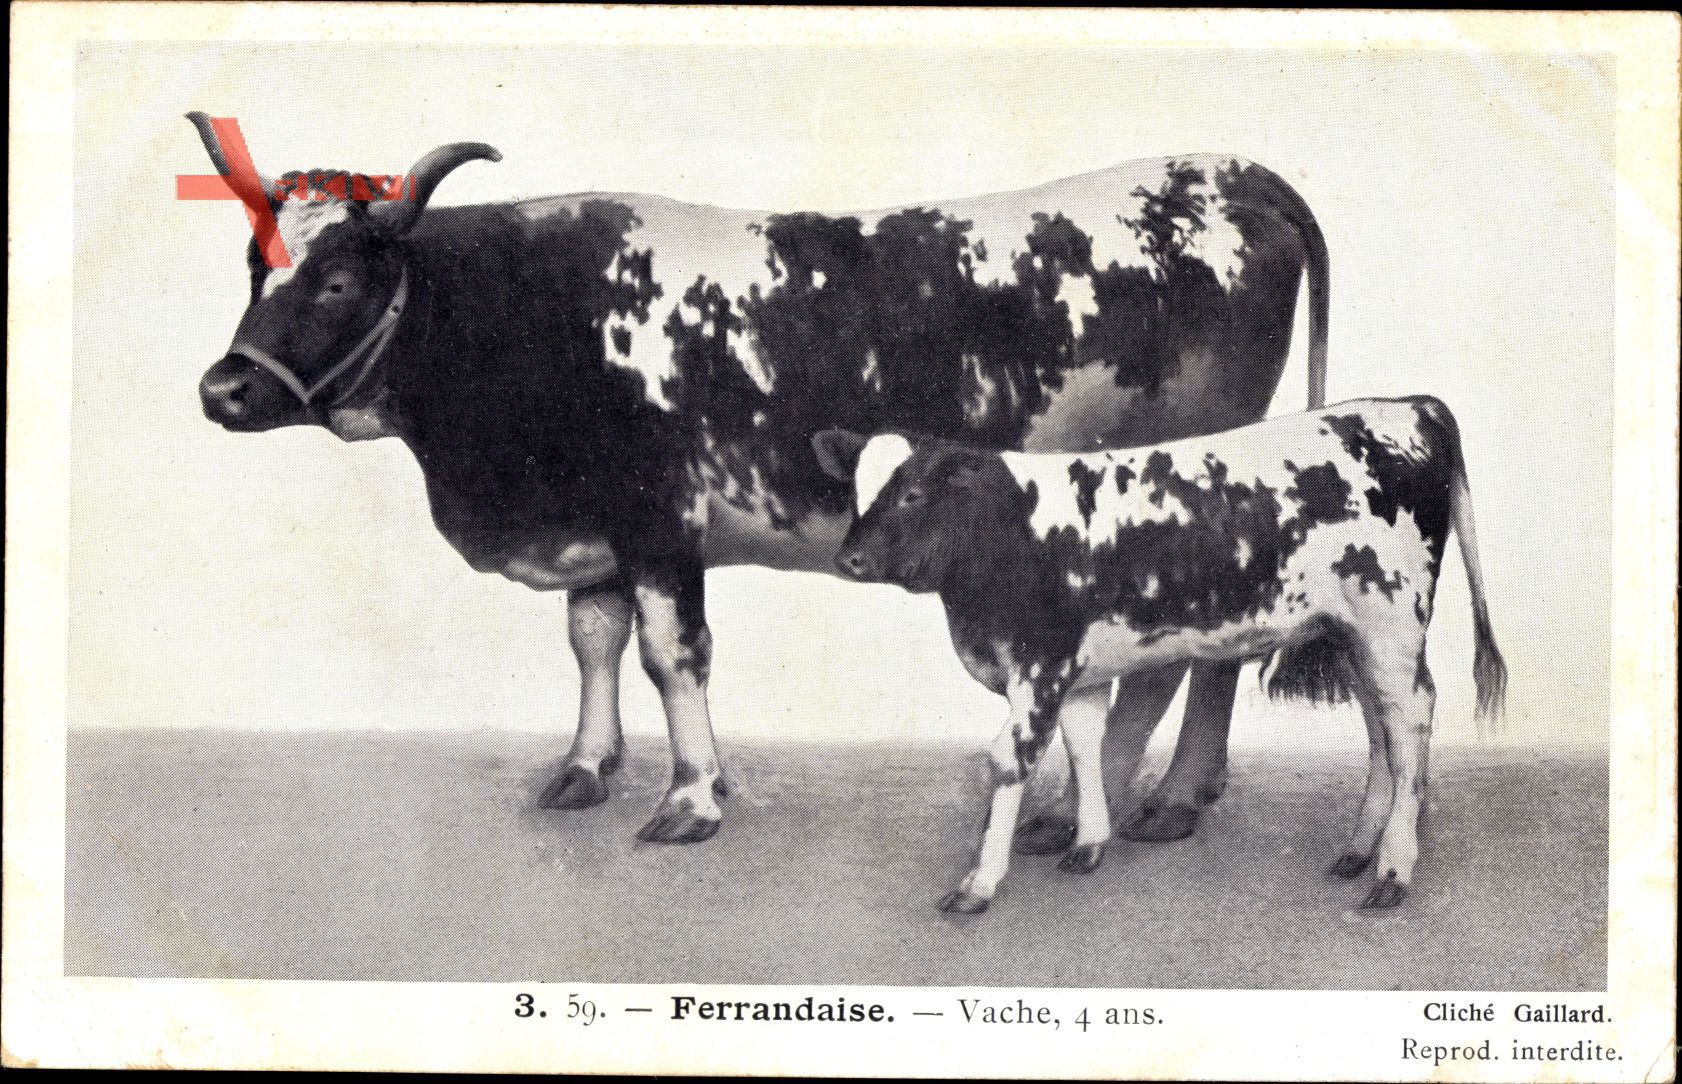 Ferrandaise, Vache, 4 ans, gefleckte Kuh mit Kalb, Hörner